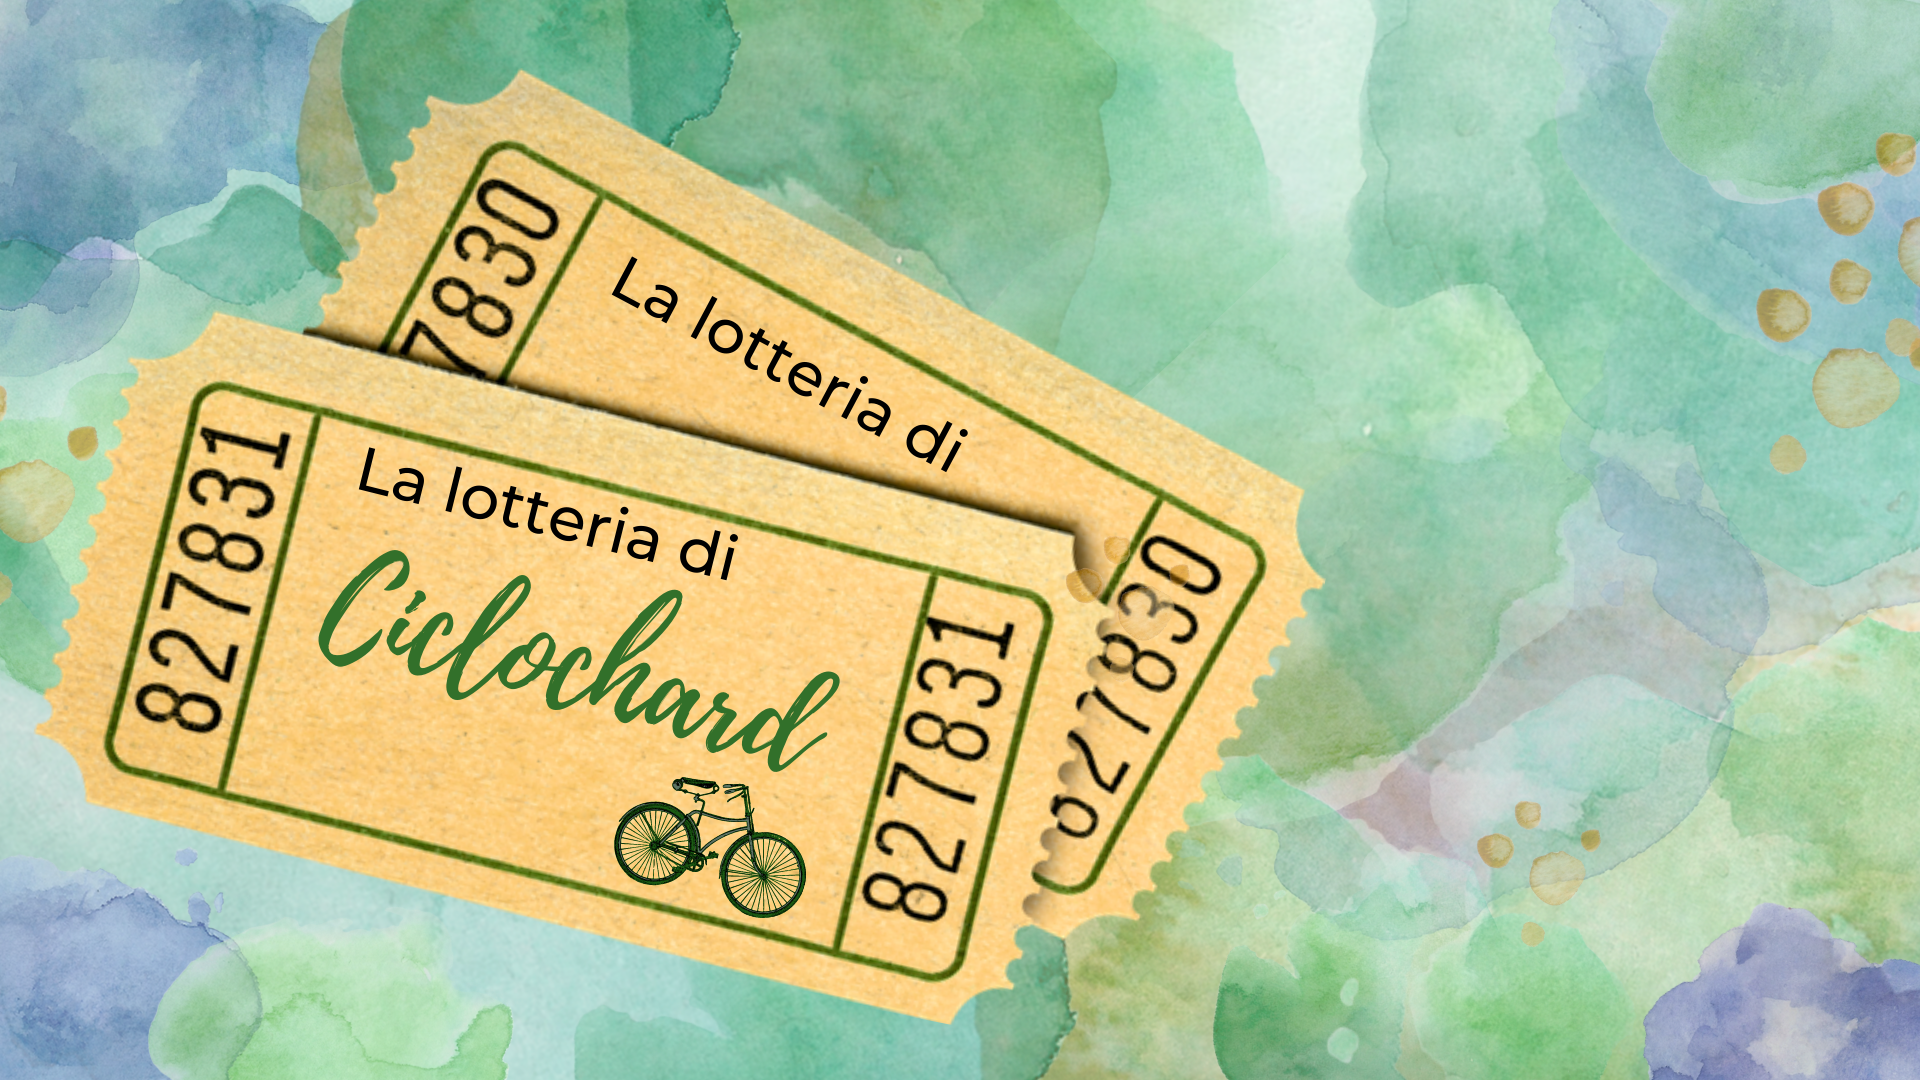 Lotteria Ciclochard